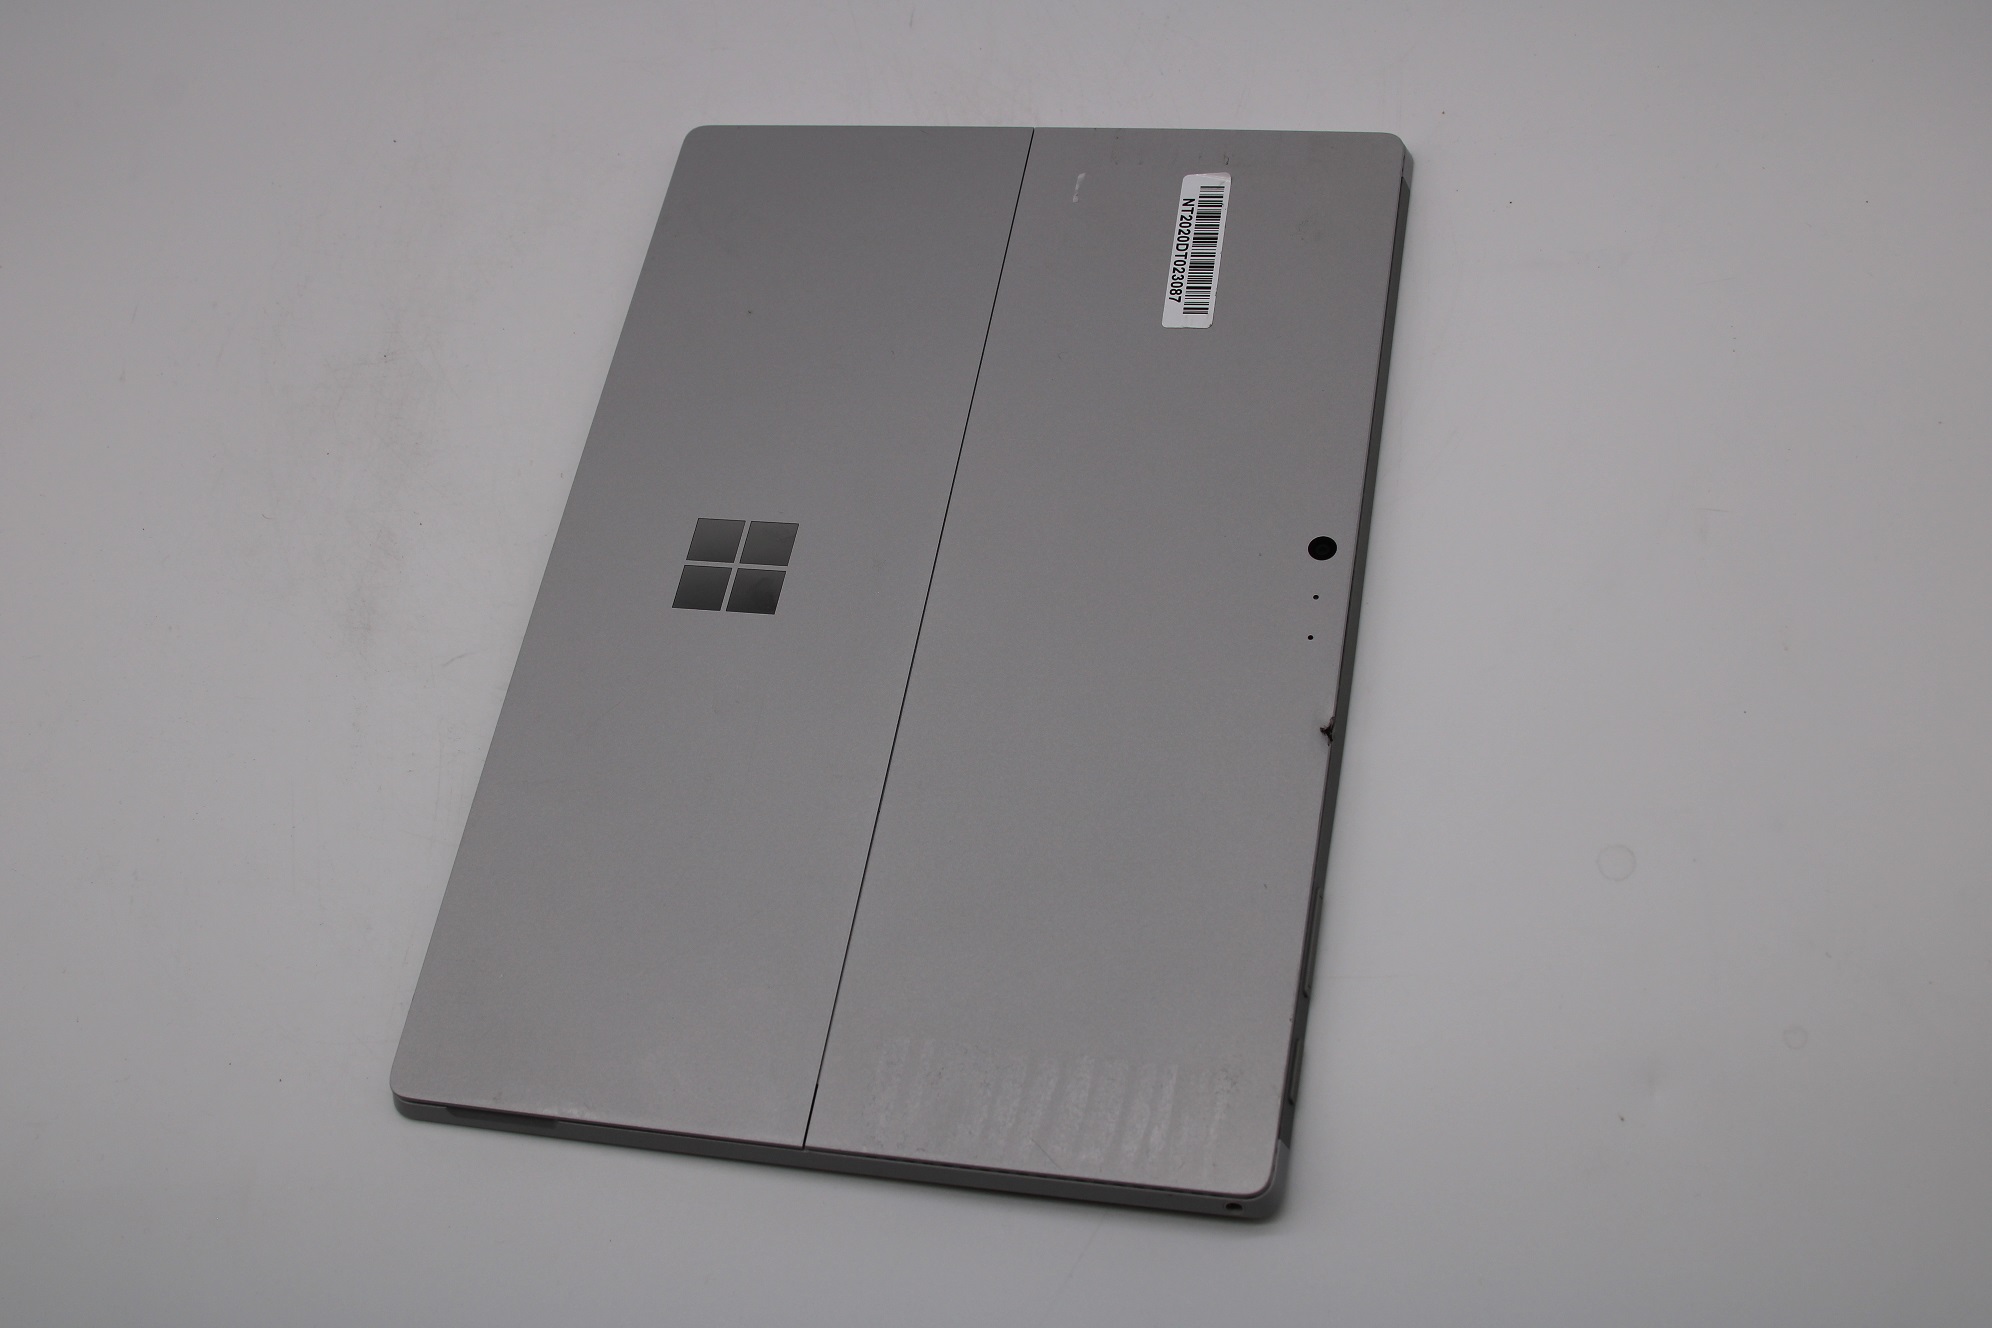 Microsoft Surface Pro 4 1724 Intel I5-6300U 2.2Ghz 8GB RAM 256GB SSD Win10 Pro